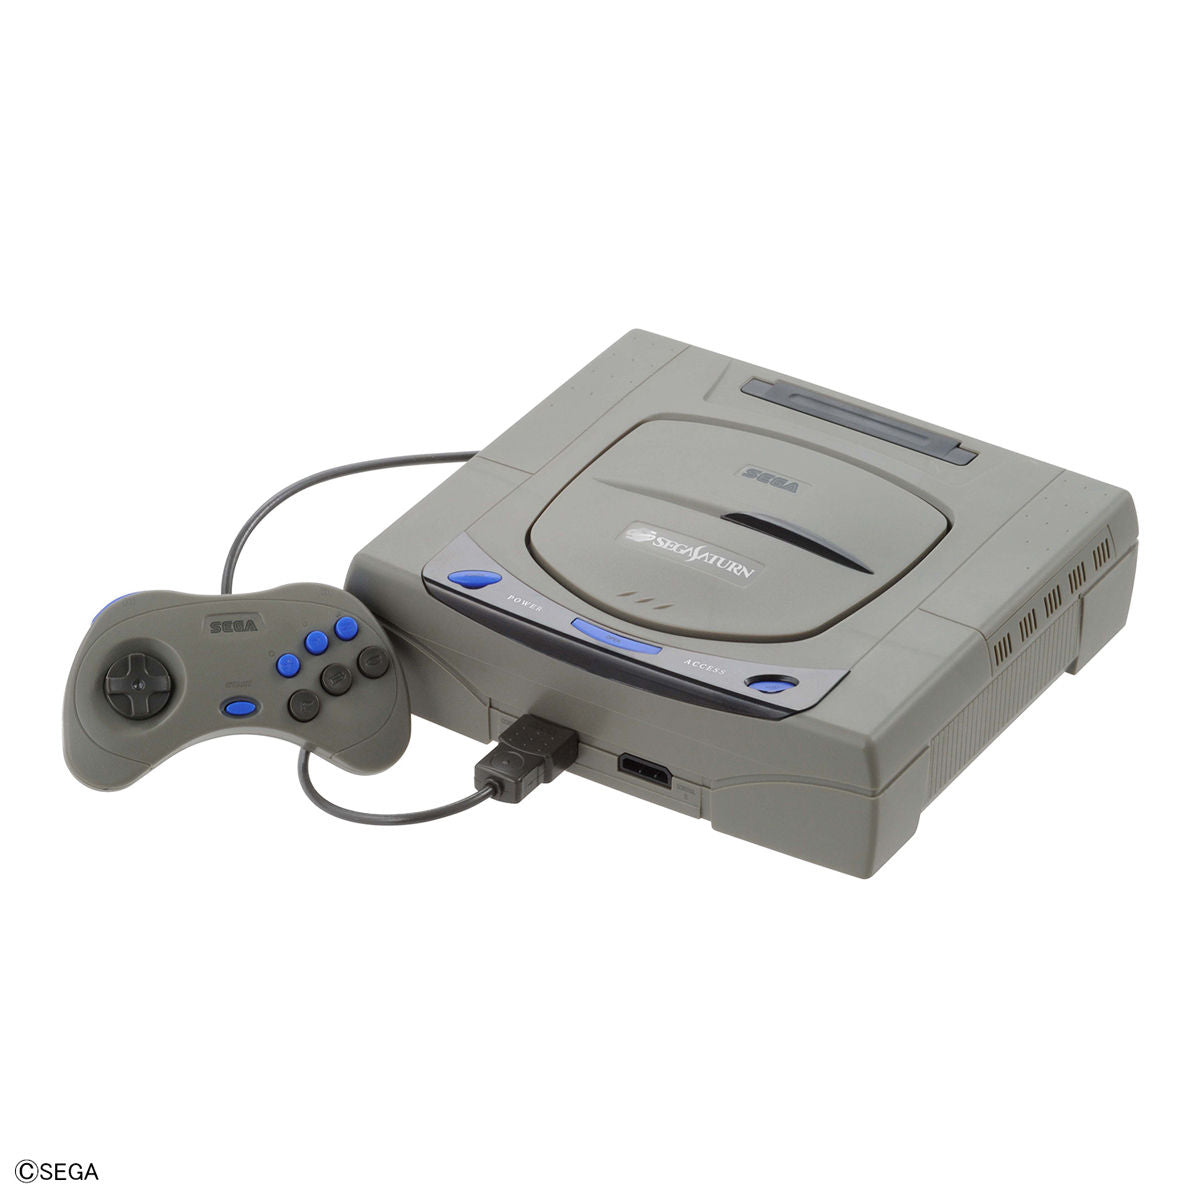 Bandai 2/5 熱潮編年史 Sega Saturn 世嘉 (HST-3200) 組裝模型